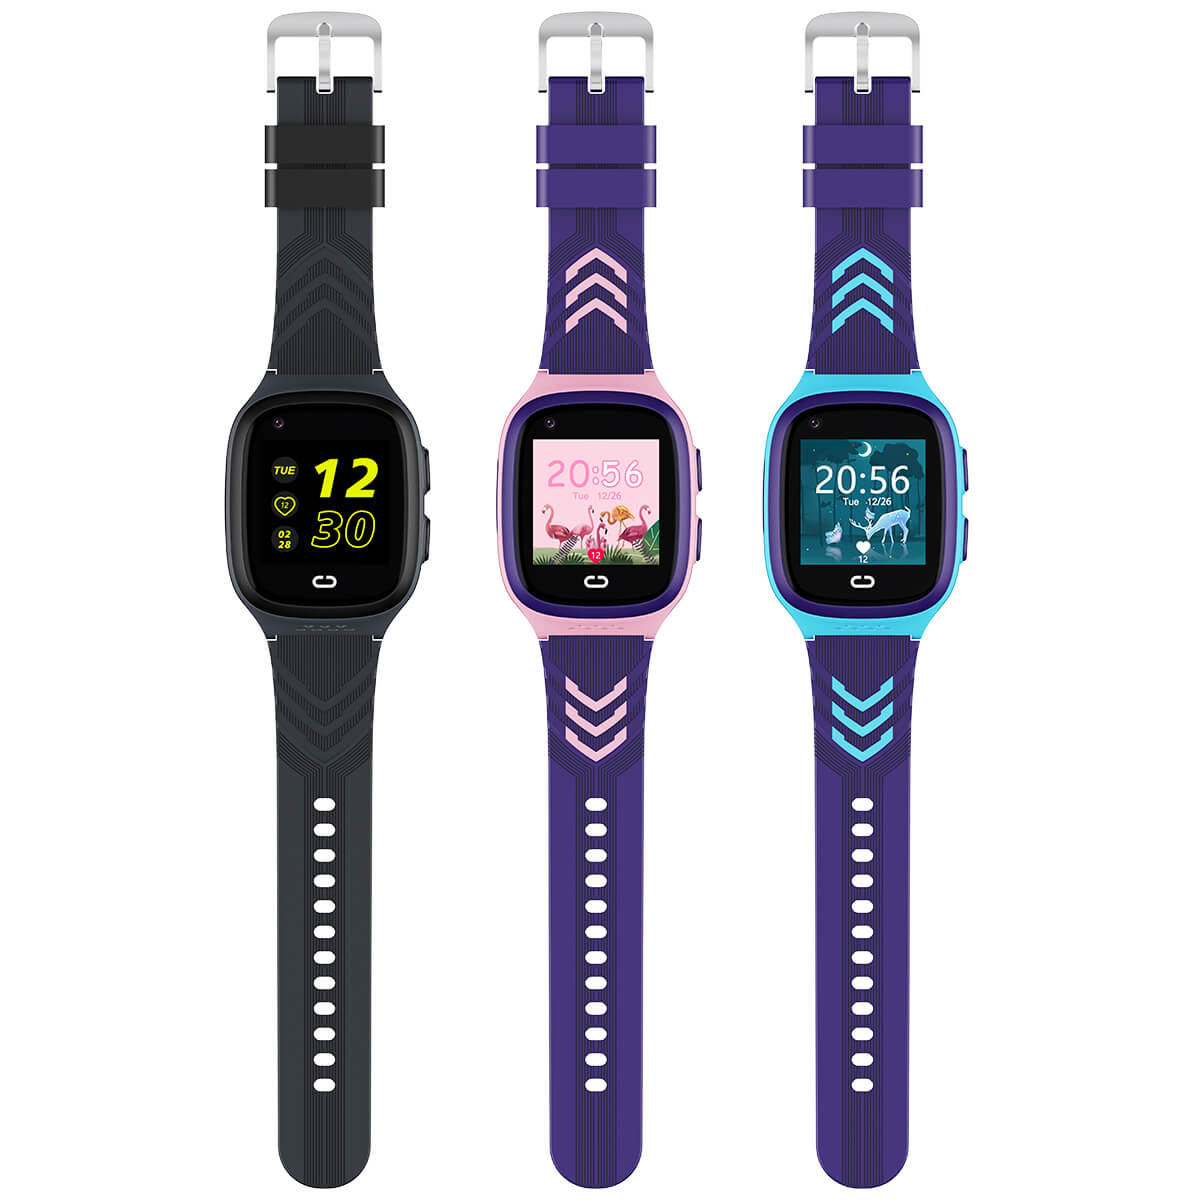 4G Kids Smart Watch ULTRA - AGPS, Video Call, SOS *New Model*